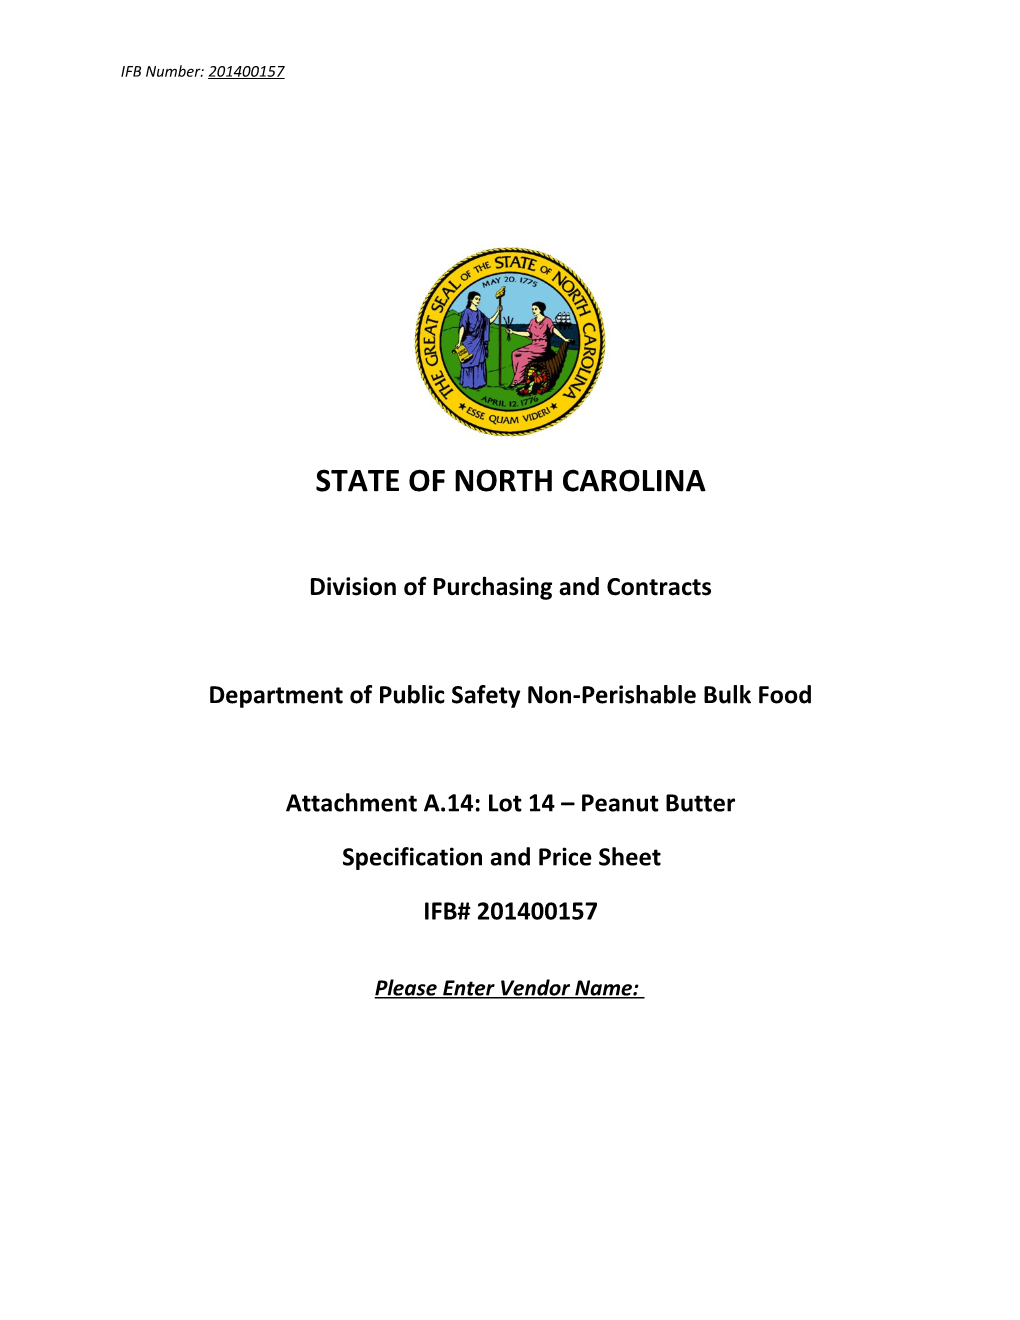 Department of Public Safety Non-Perishable Bulk Food